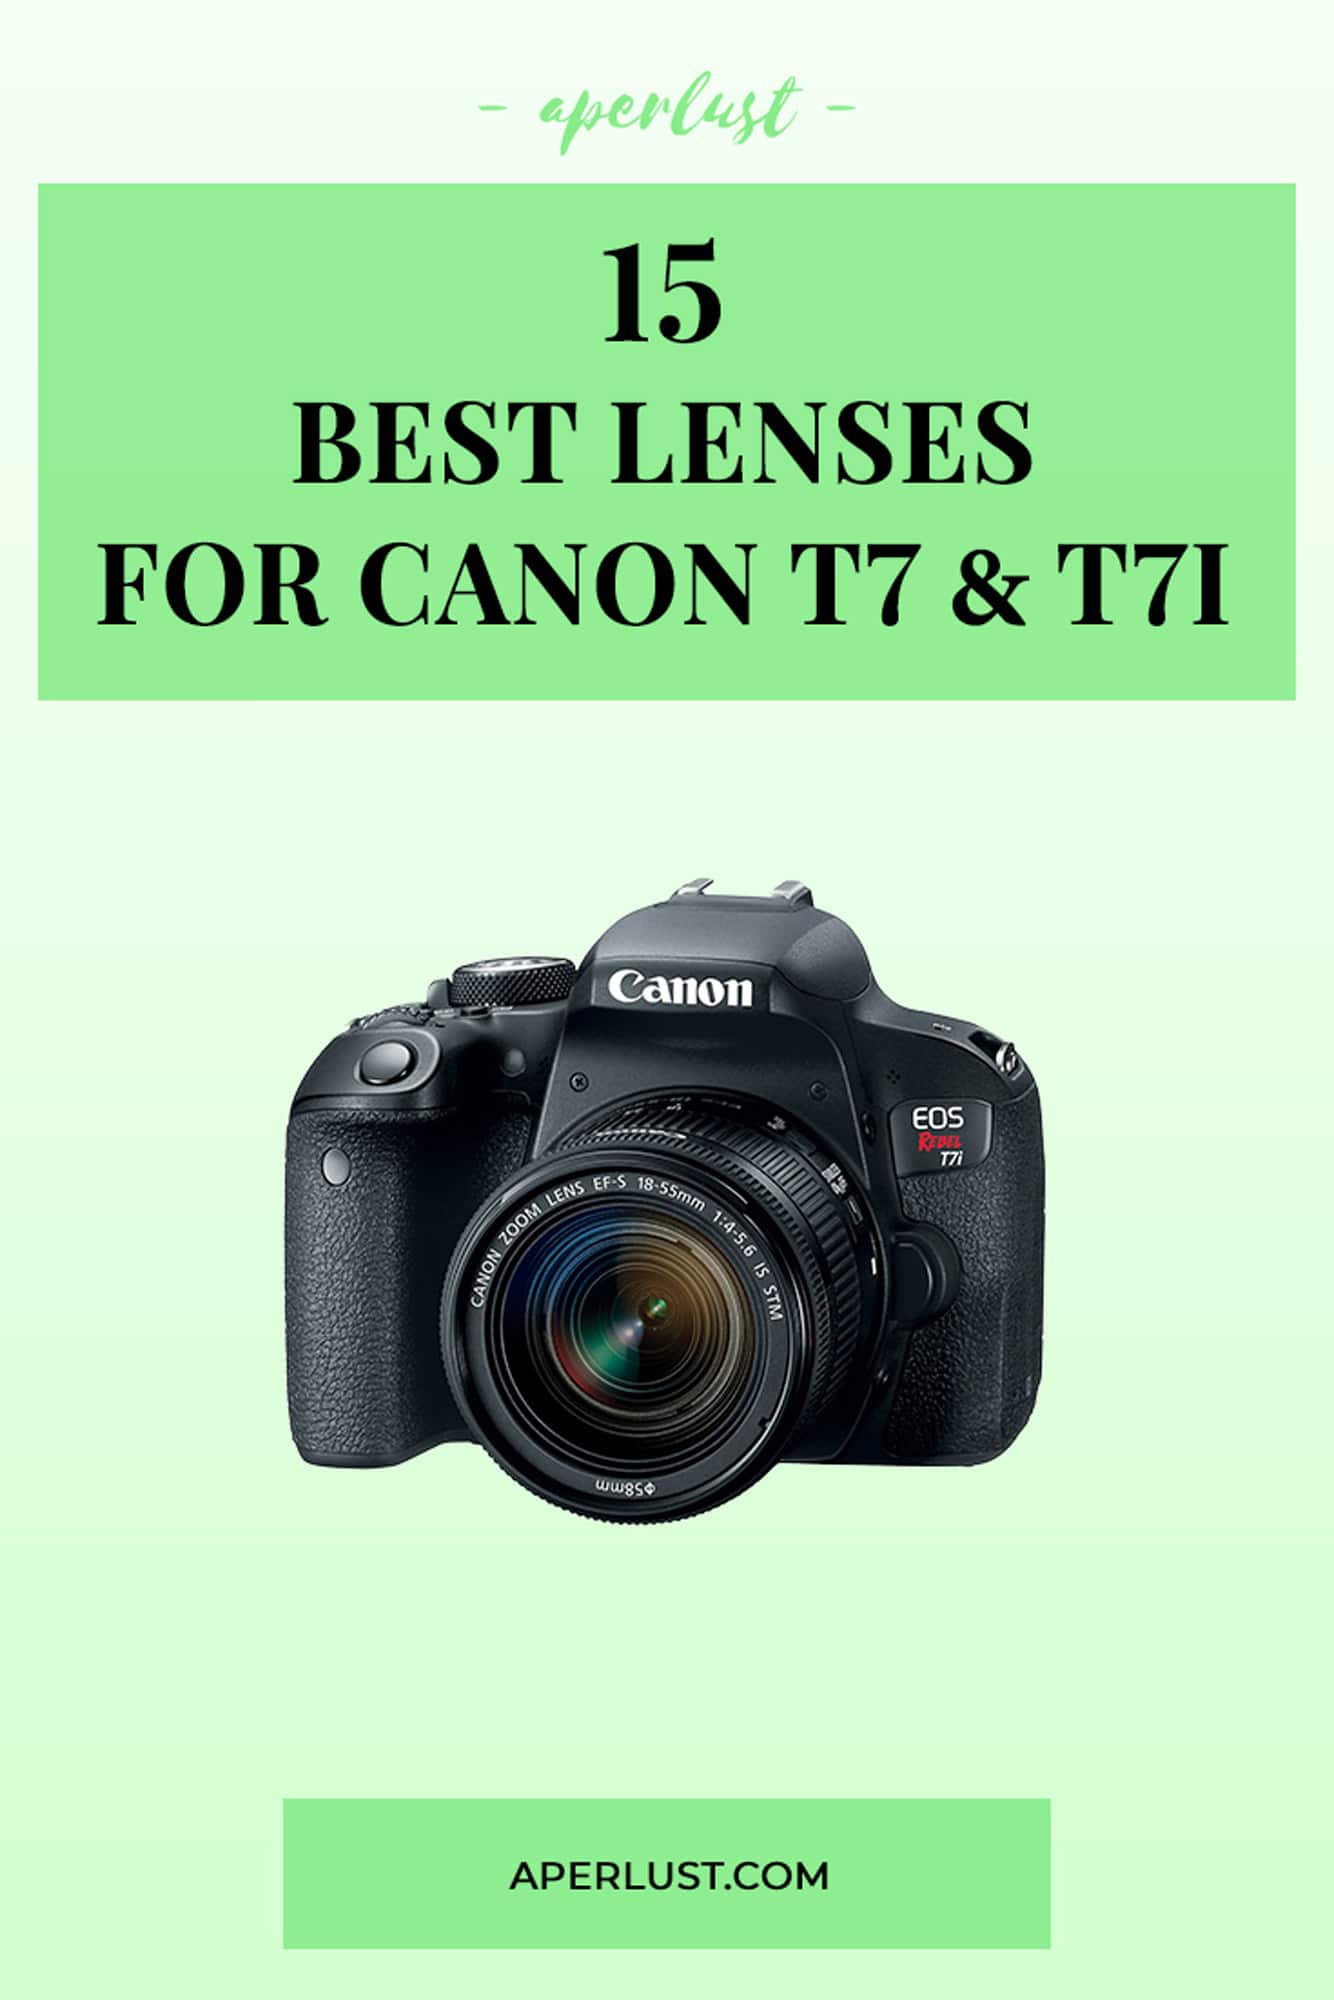 15 best lenses for Canon T7 and T7i Pinterest Pin